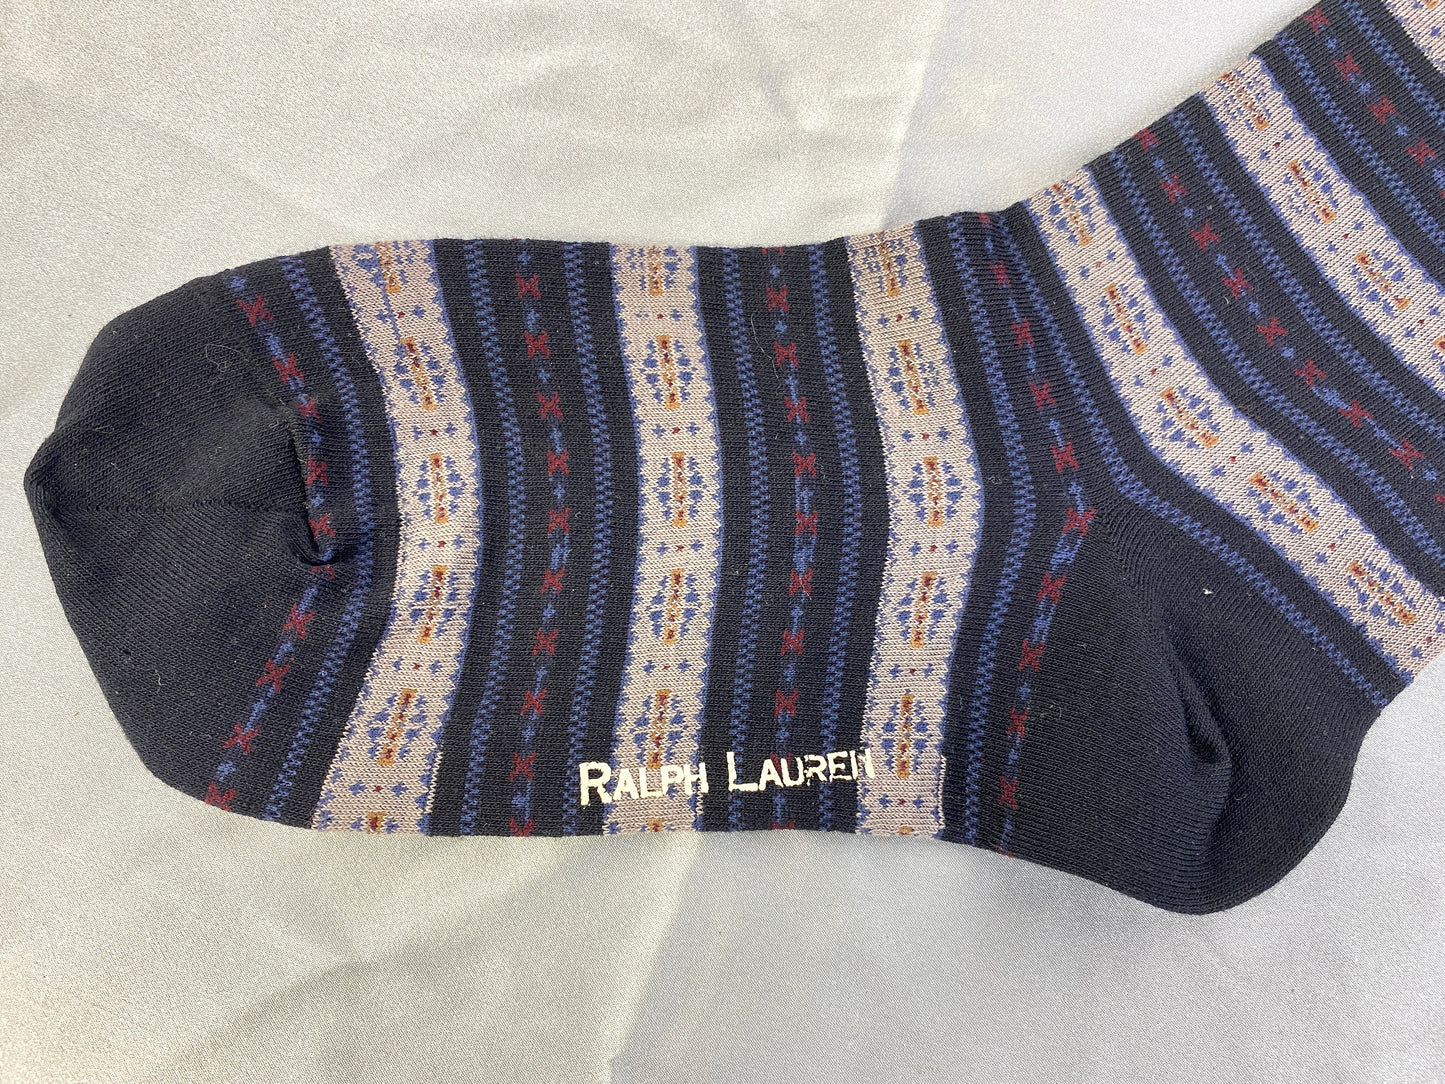 Vintage Cotton Ralph Lauren Patterned Over-Knee Socks, x2